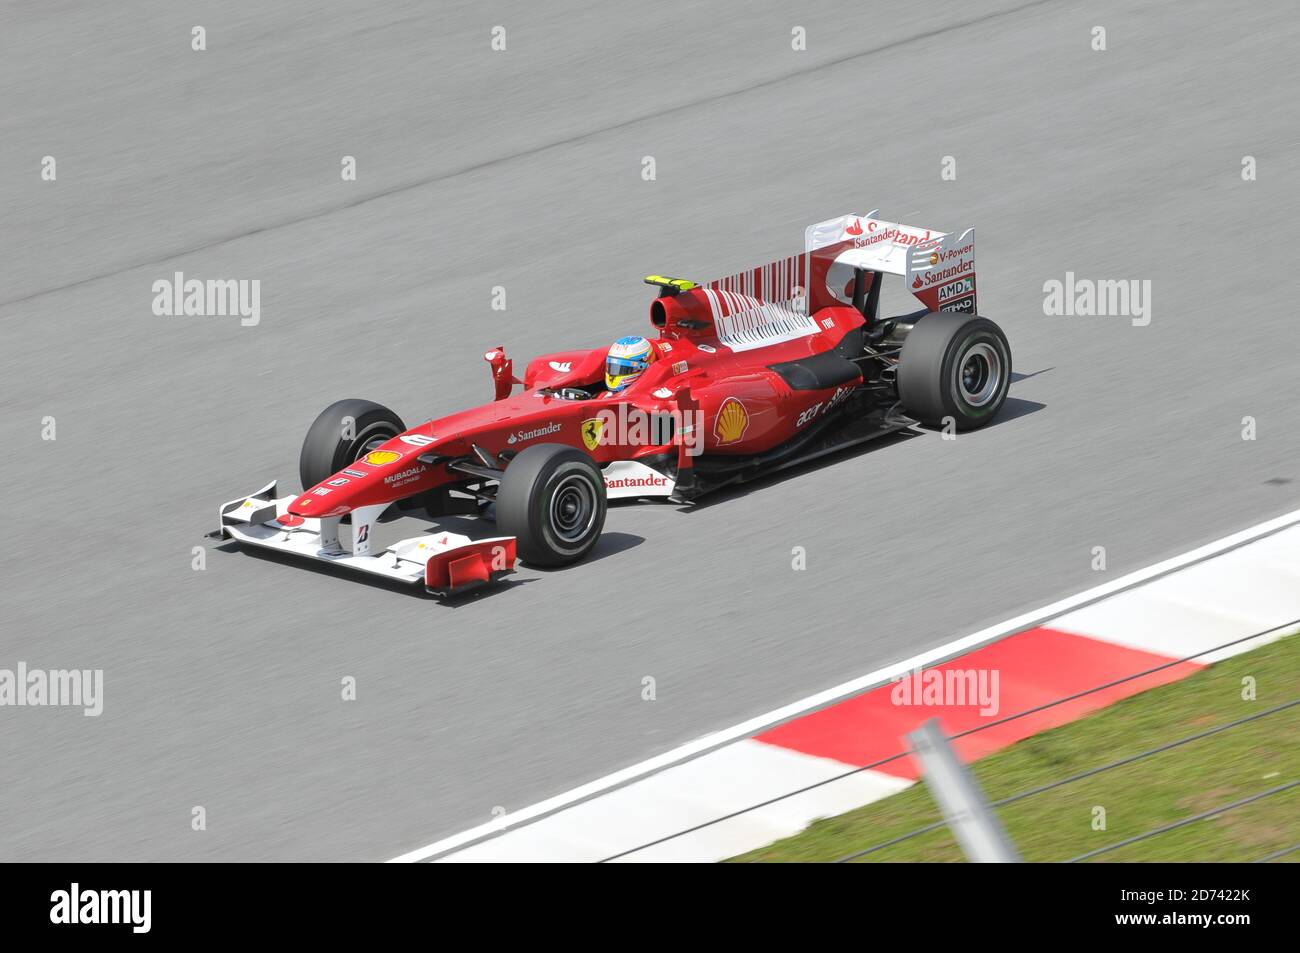 SEPANG, MALAYSIA - APRIL 2 : Scuderia Ferrari Marlboro driver Fernando Alonso of Spain drives during the first practice session at the Sepang F1 circu Stock Photo